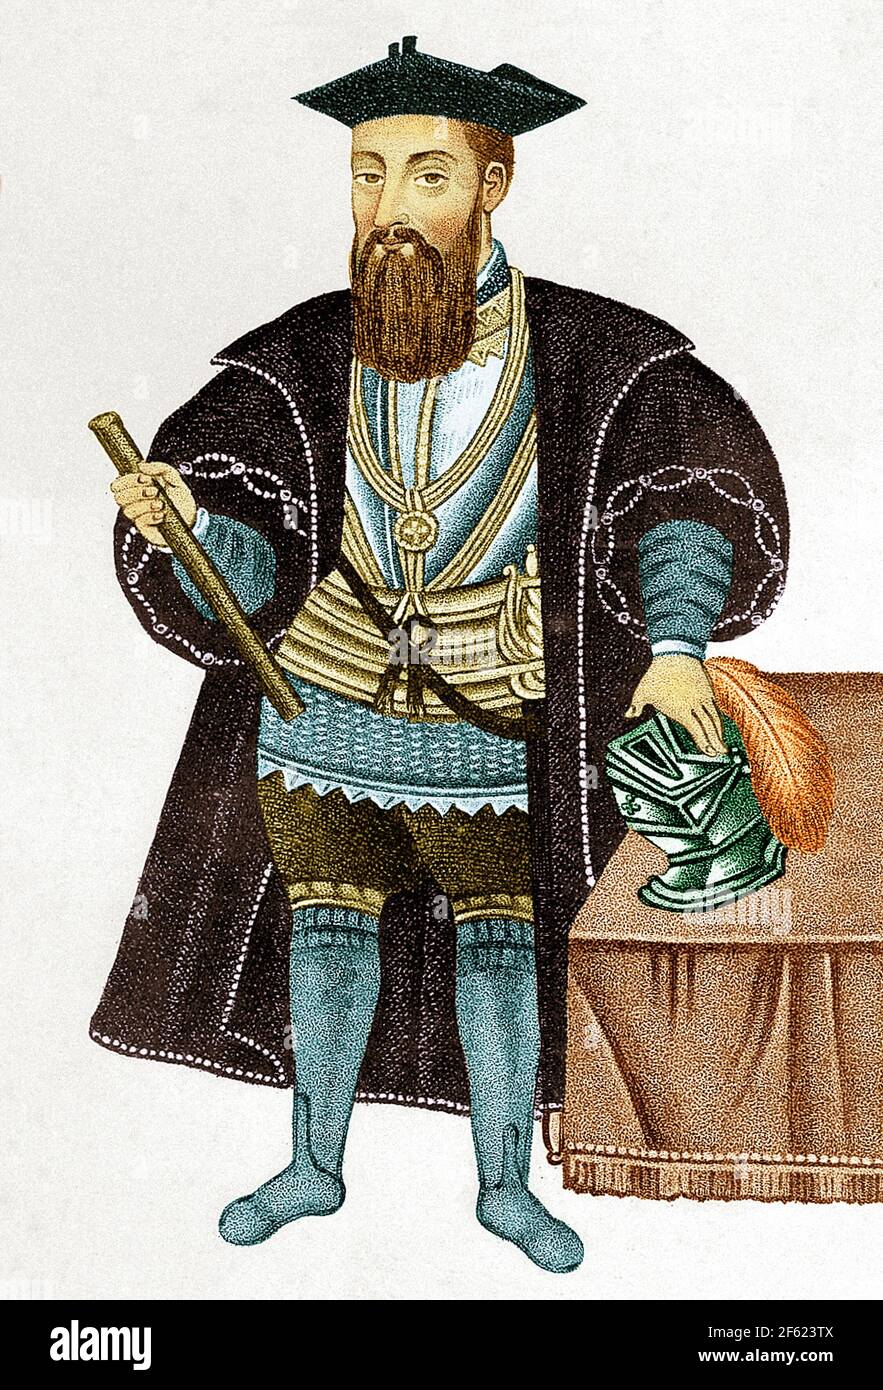 Vasco da Gama, esploratore portoghese Foto stock - Alamy